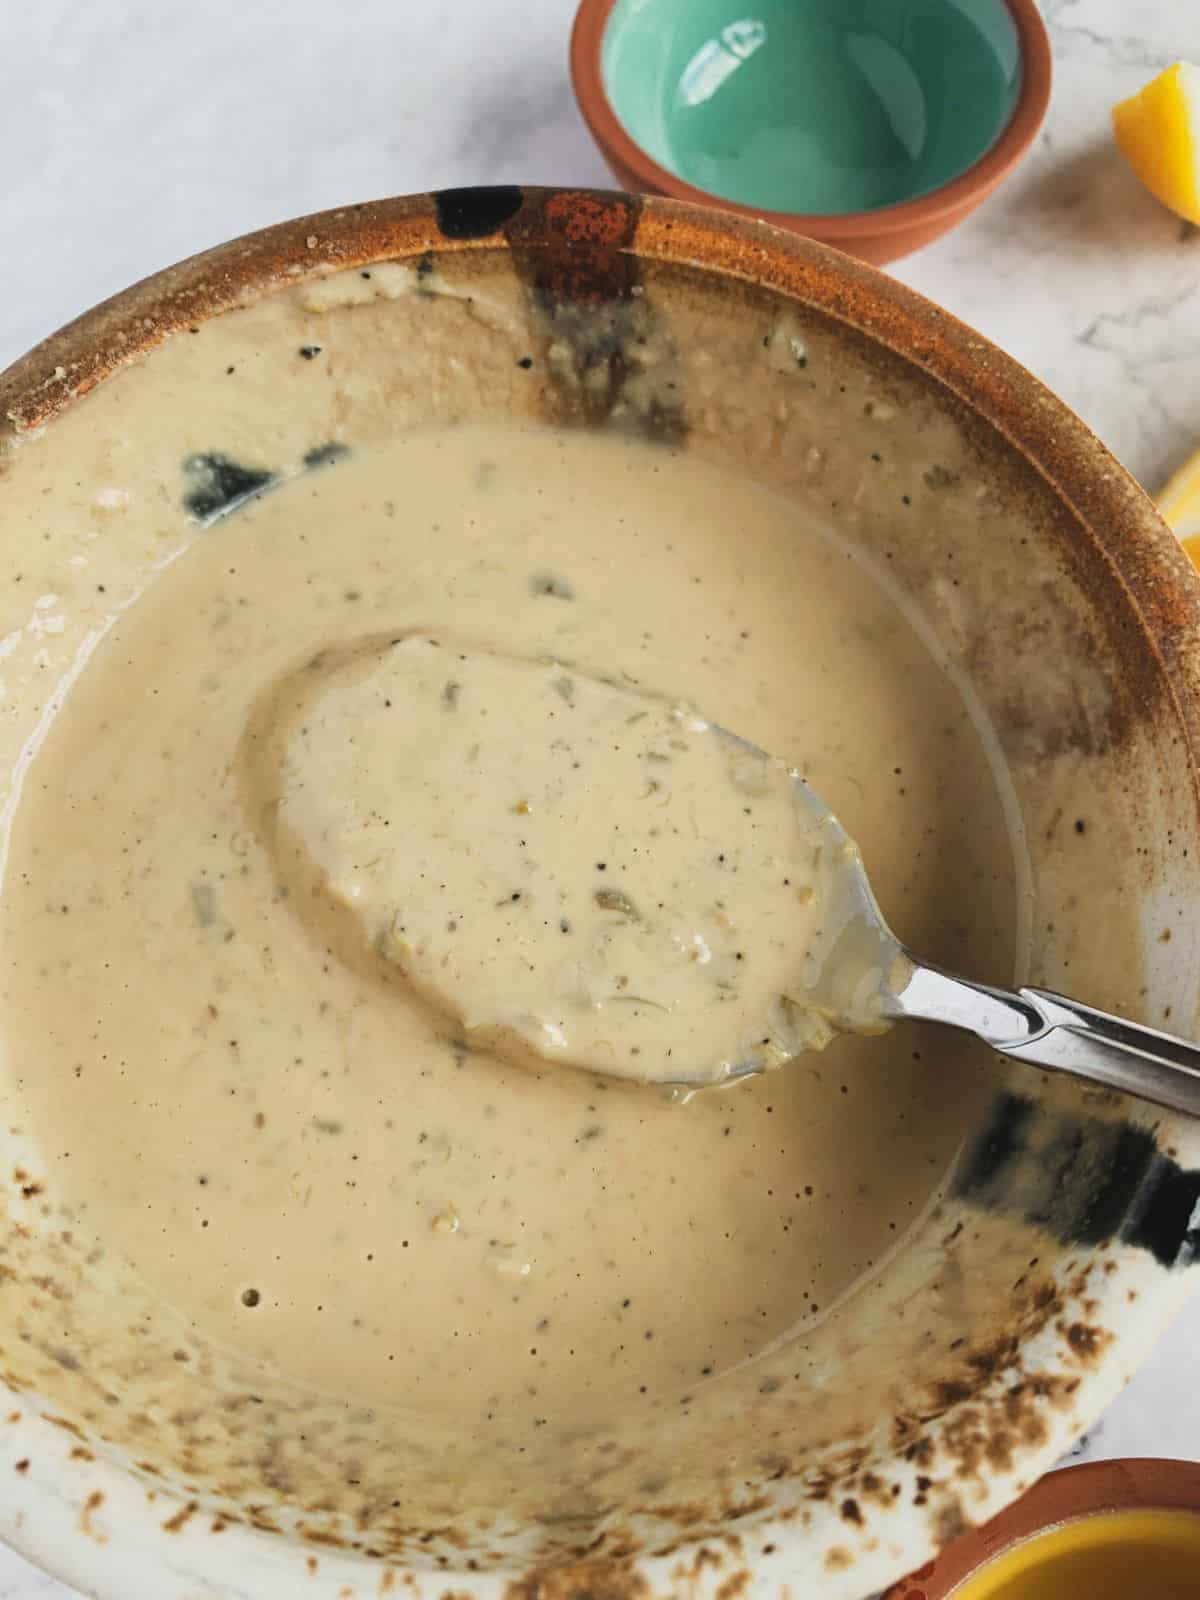 prepared vegan caesar dressing in a ceramic bowl with a spoon